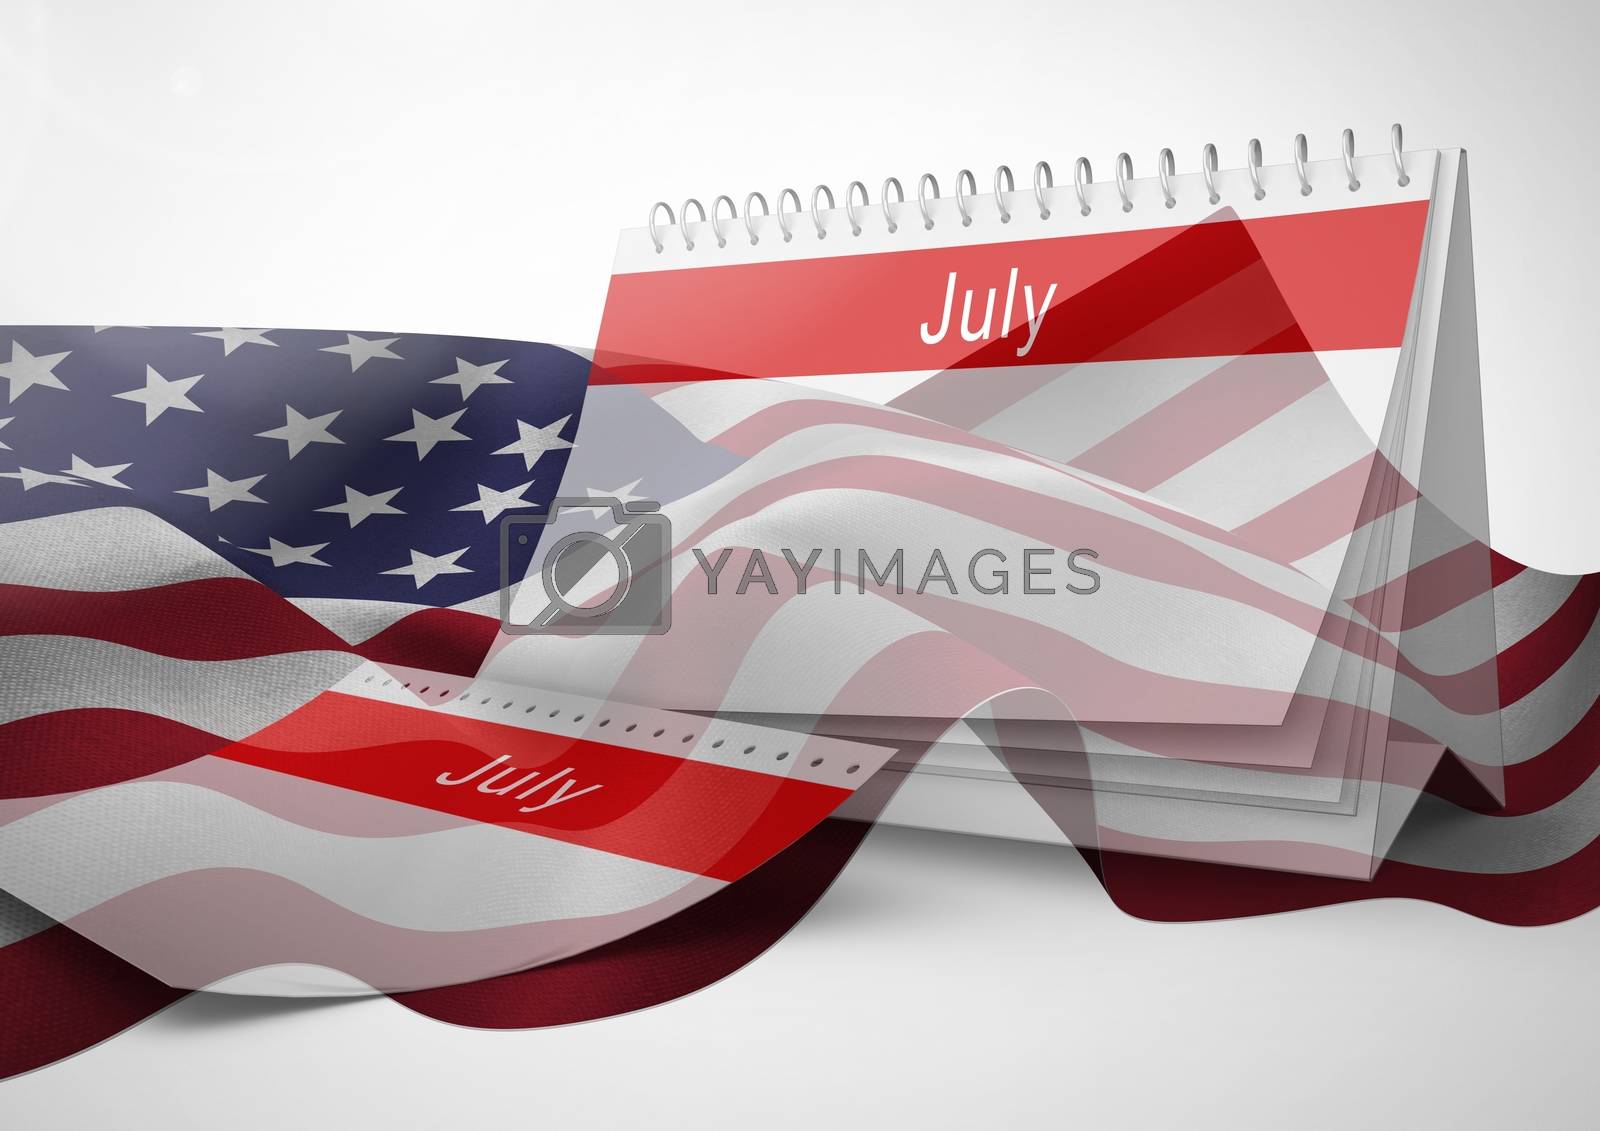 Royalty free image of July calendar against american flag by Wavebreakmedia